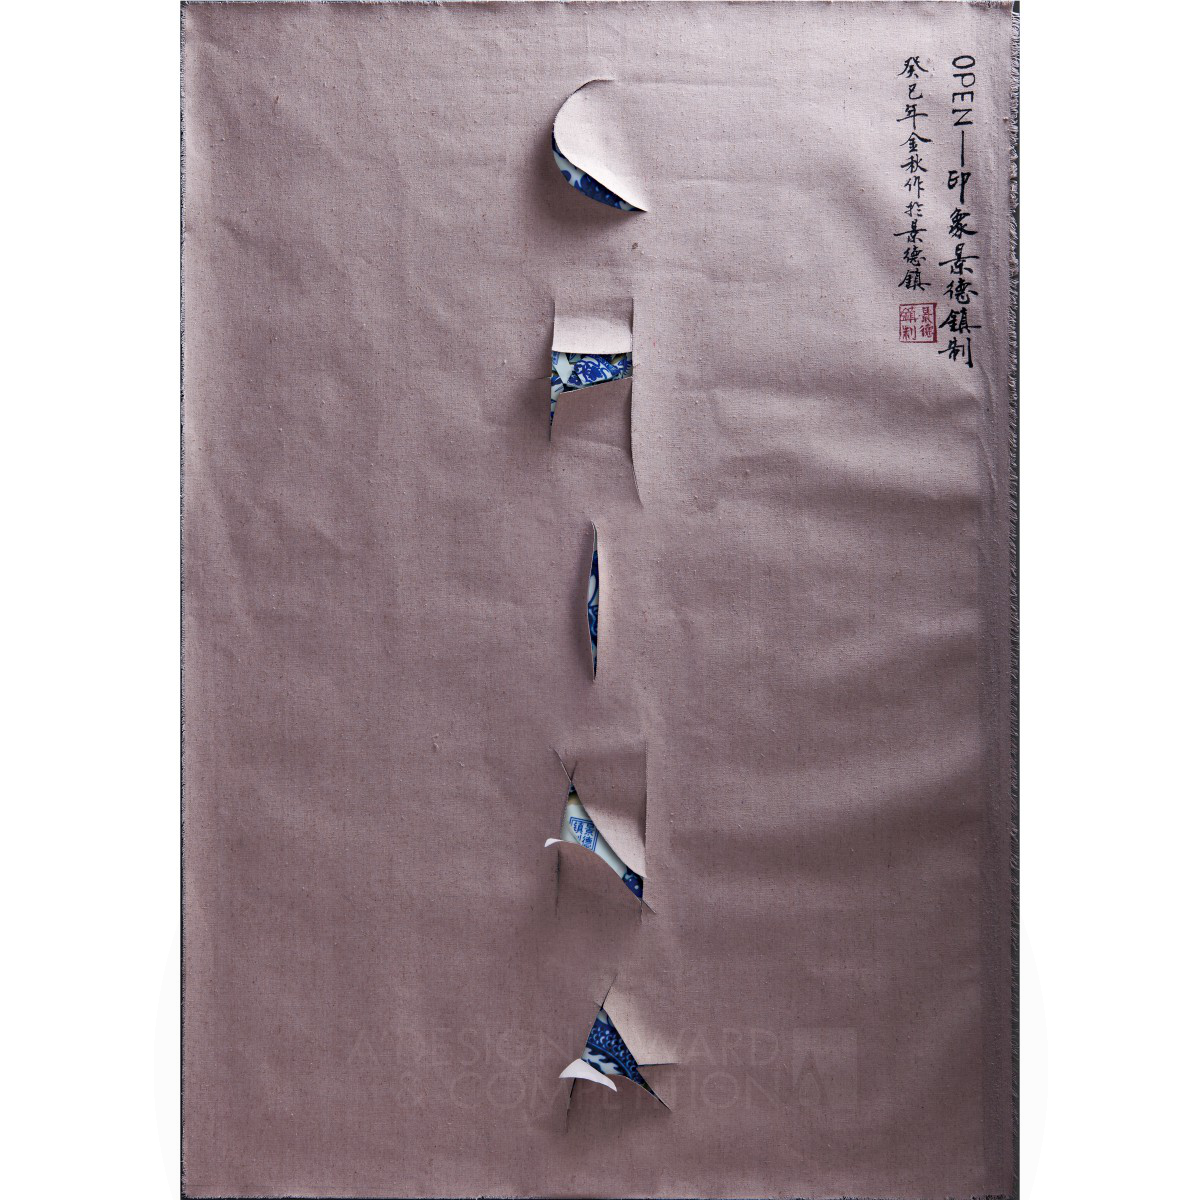 OPEN-jingdezhen Image Poster by Chao Yang